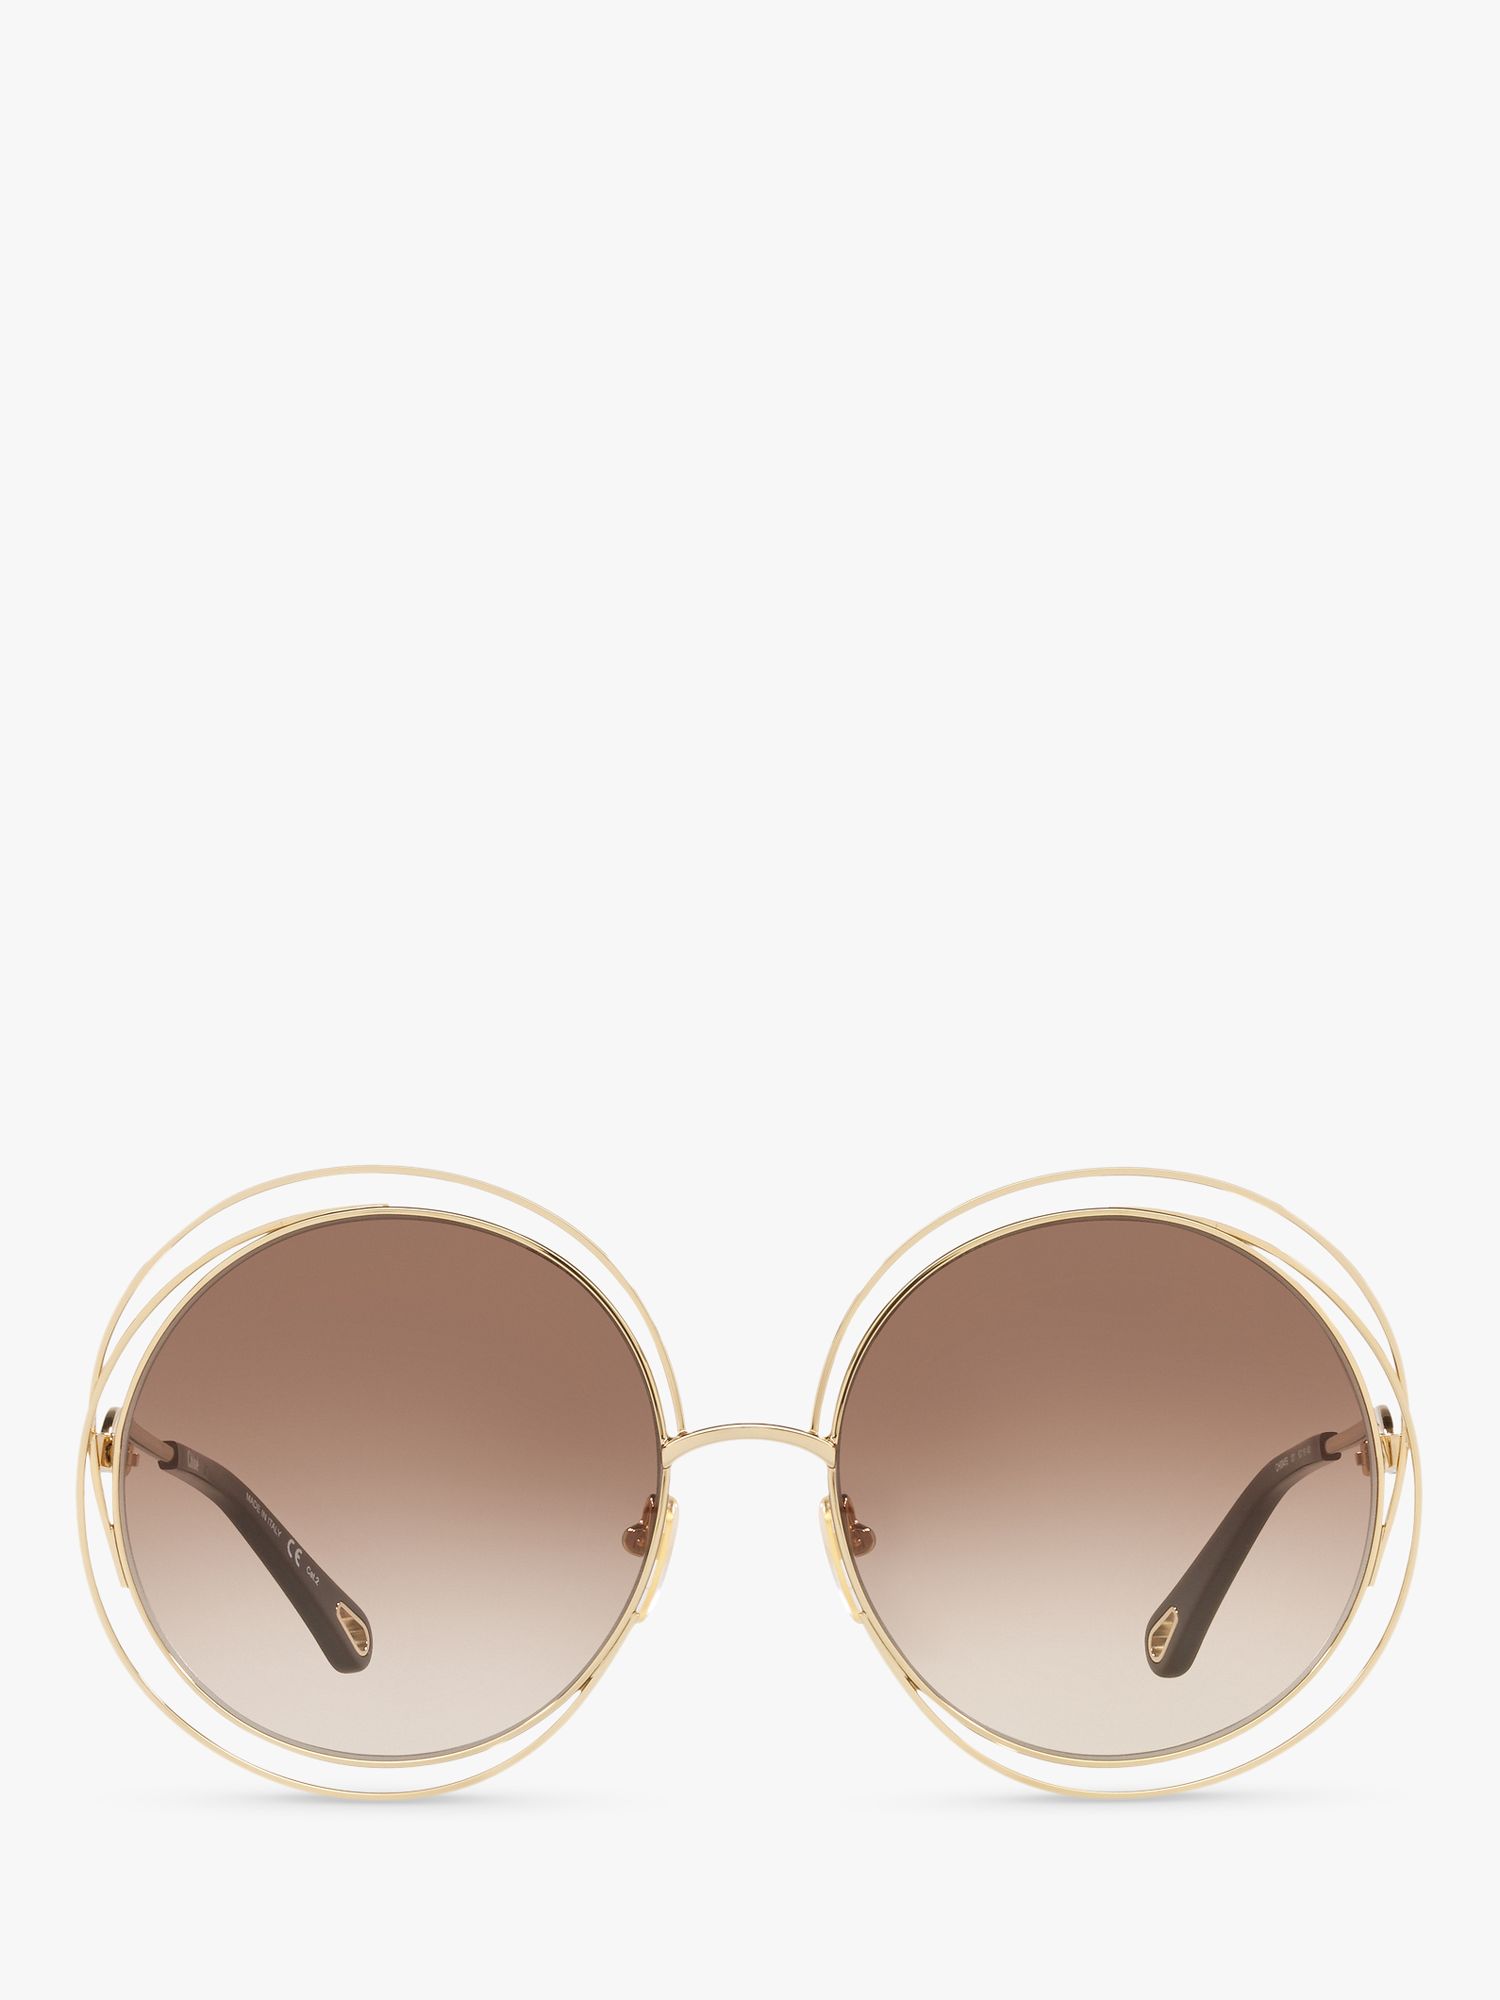 Buy Chloé CH0045S Women's Round Sunglasses Online at johnlewis.com